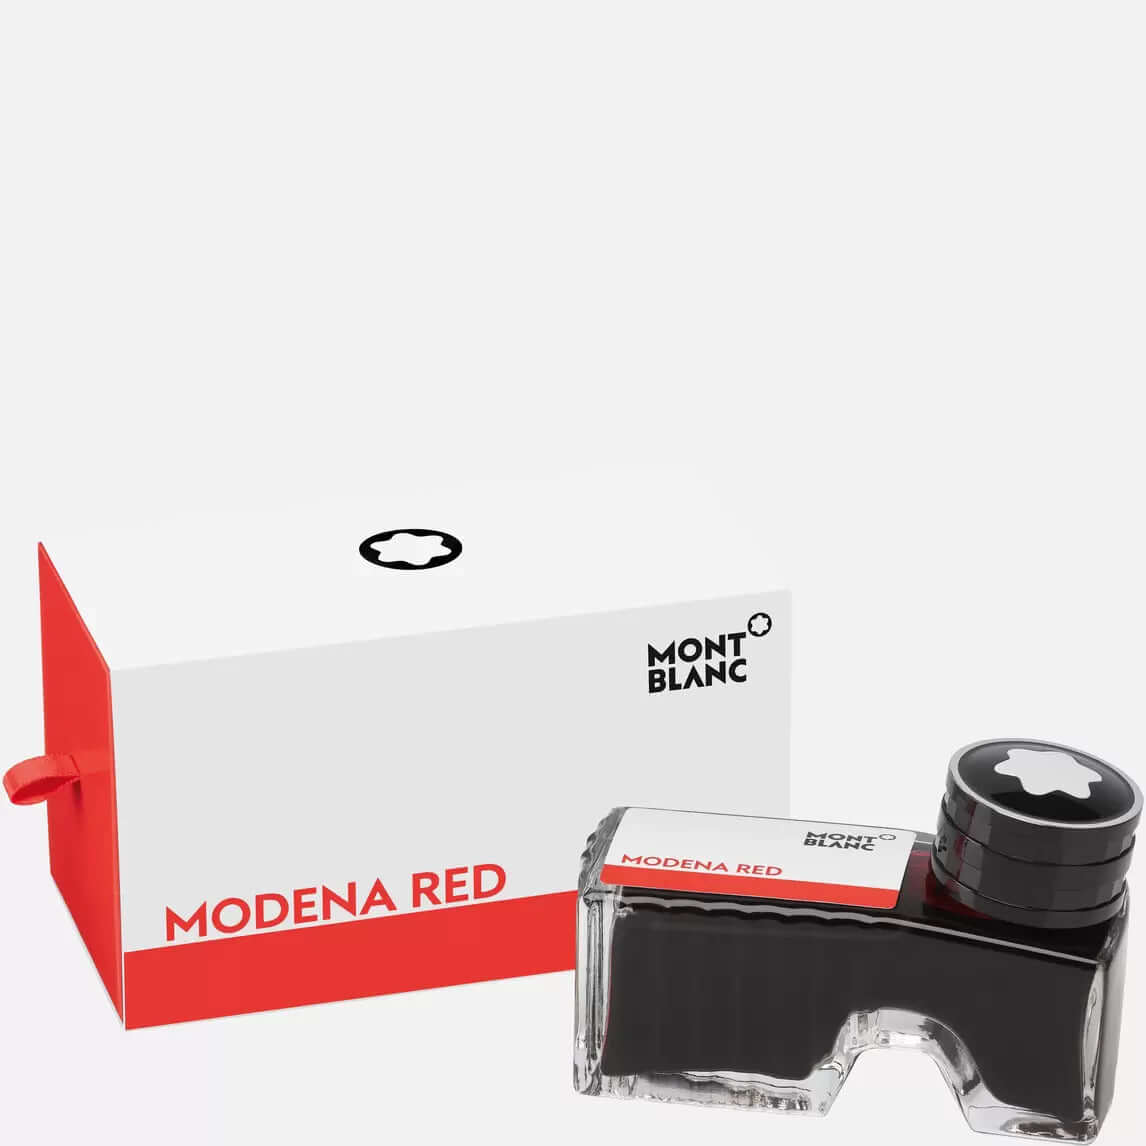 Refill Montblanc Moderna Red Ink Cartridges | Pen Store | Pen Place